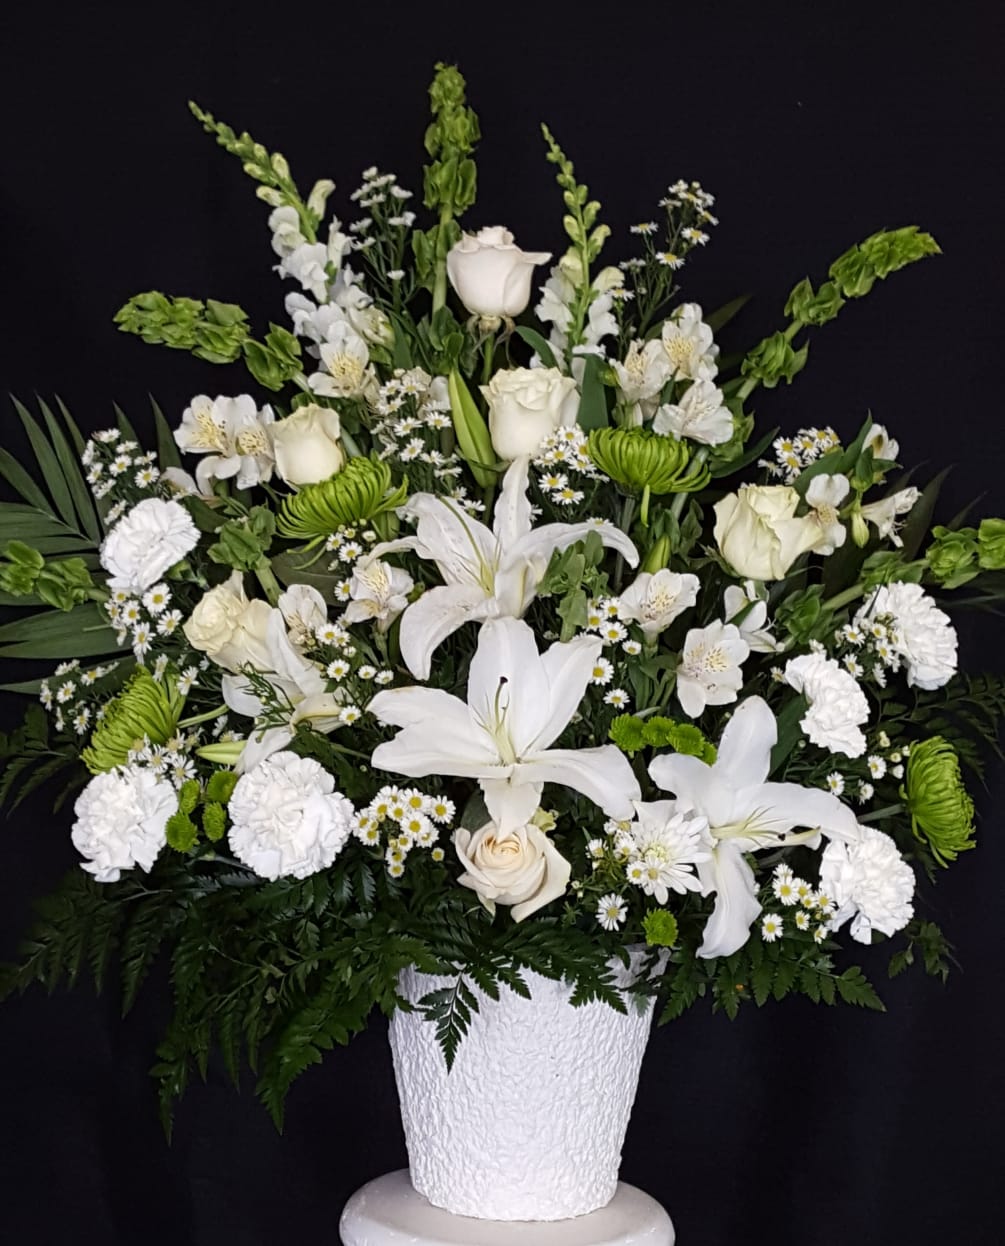 elegant white arrangement with green accents in a mache basket